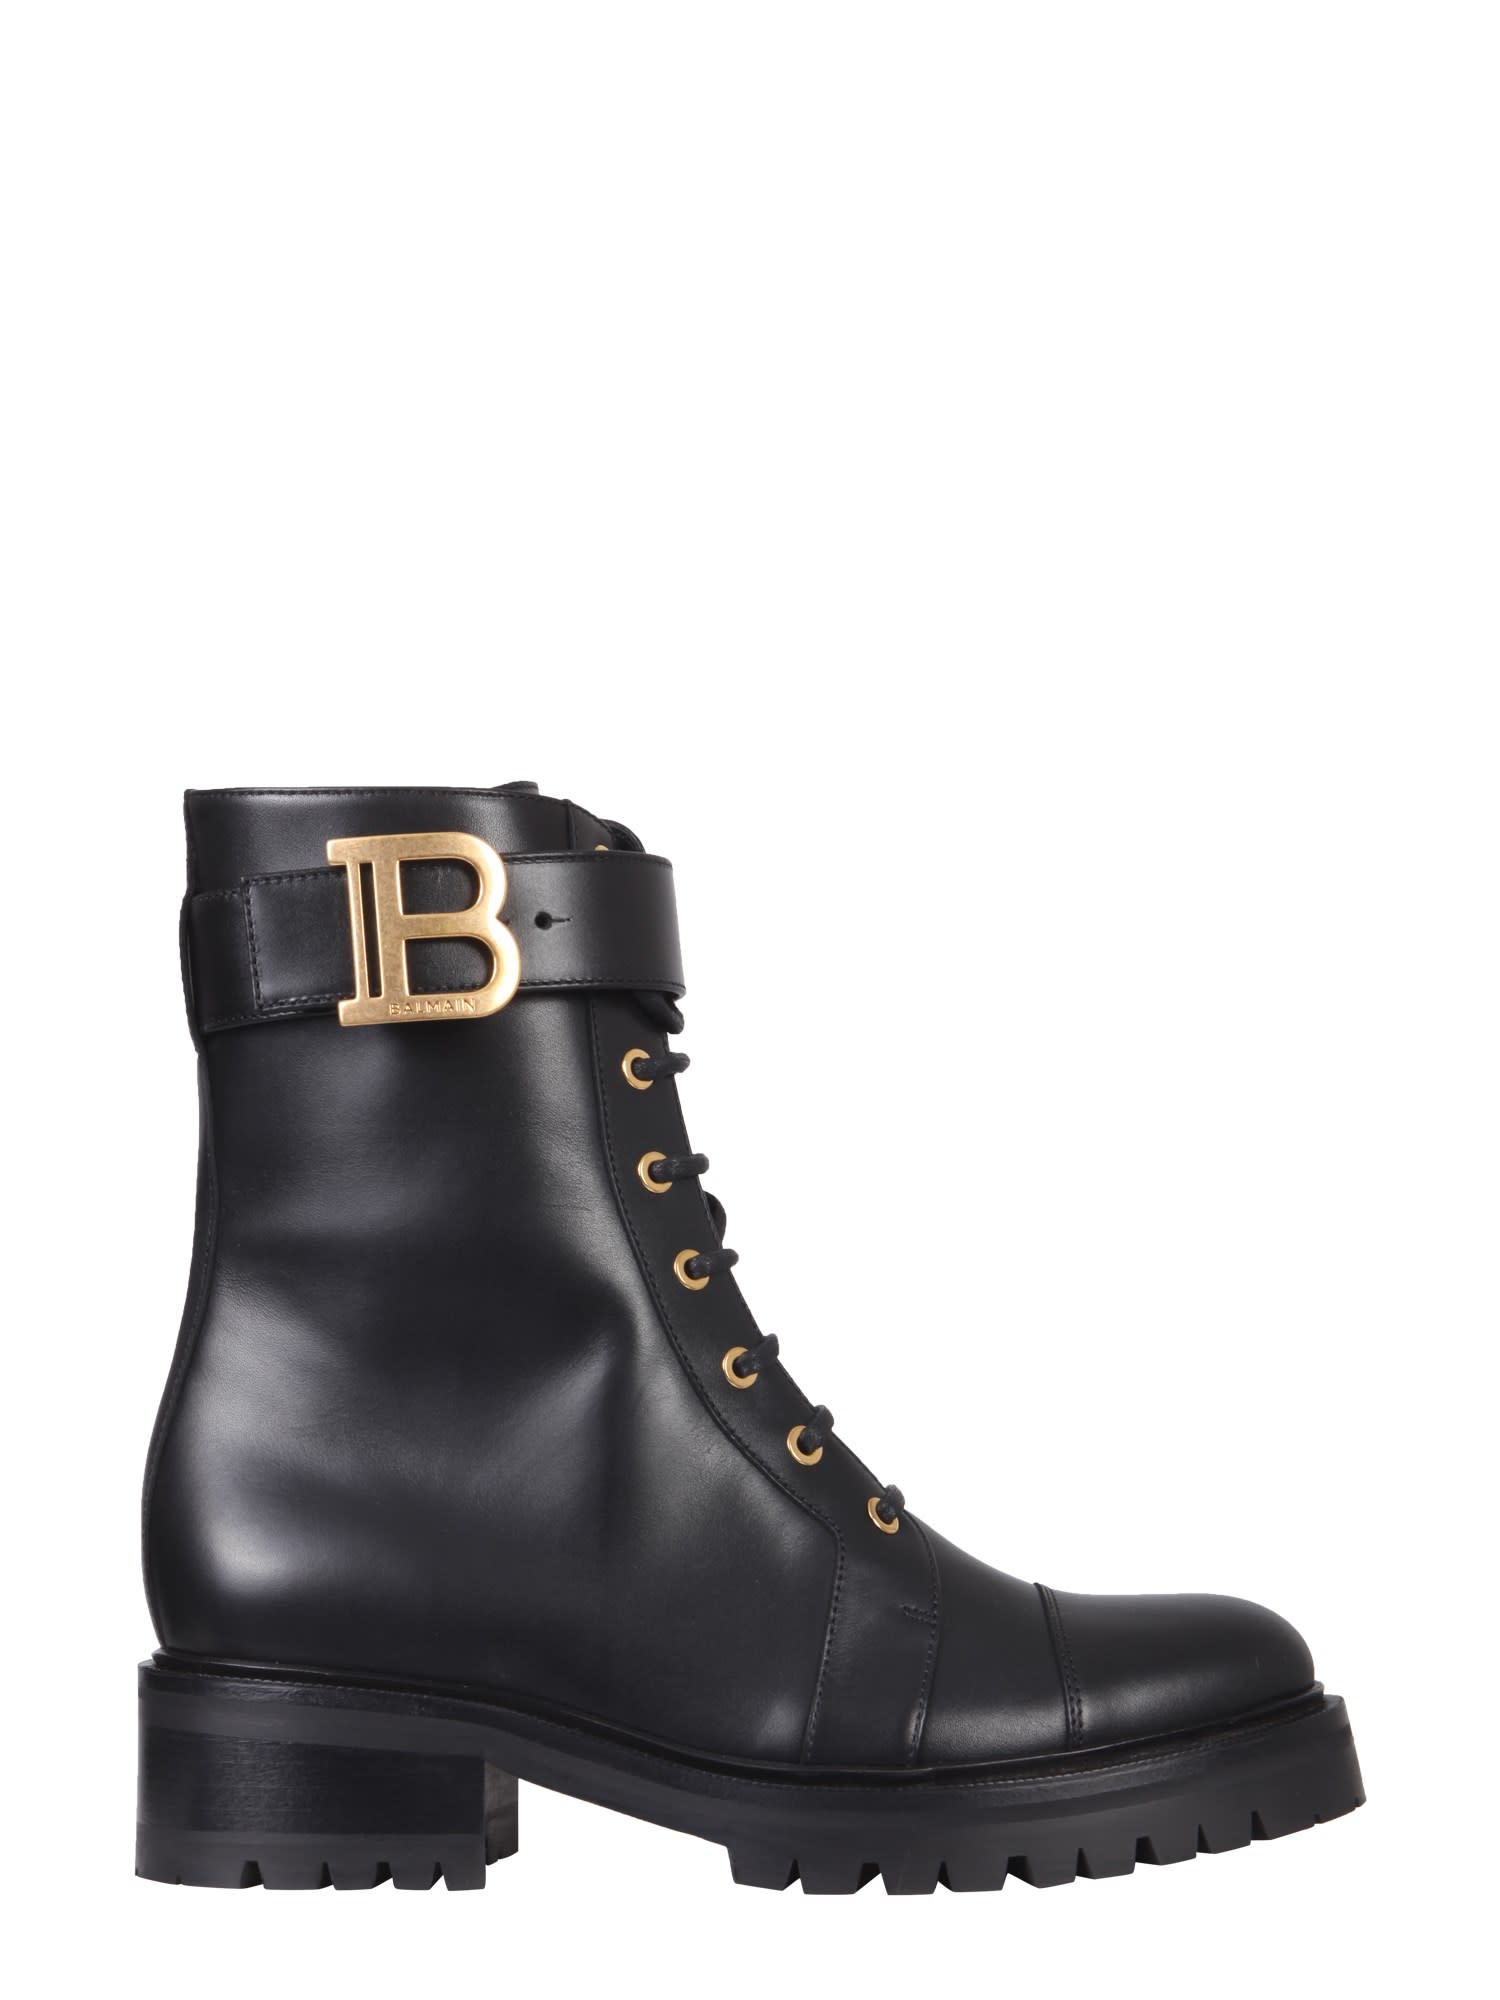 Buy Balmain Ranger Romy Boots online, shop Balmain shoes with free shipping